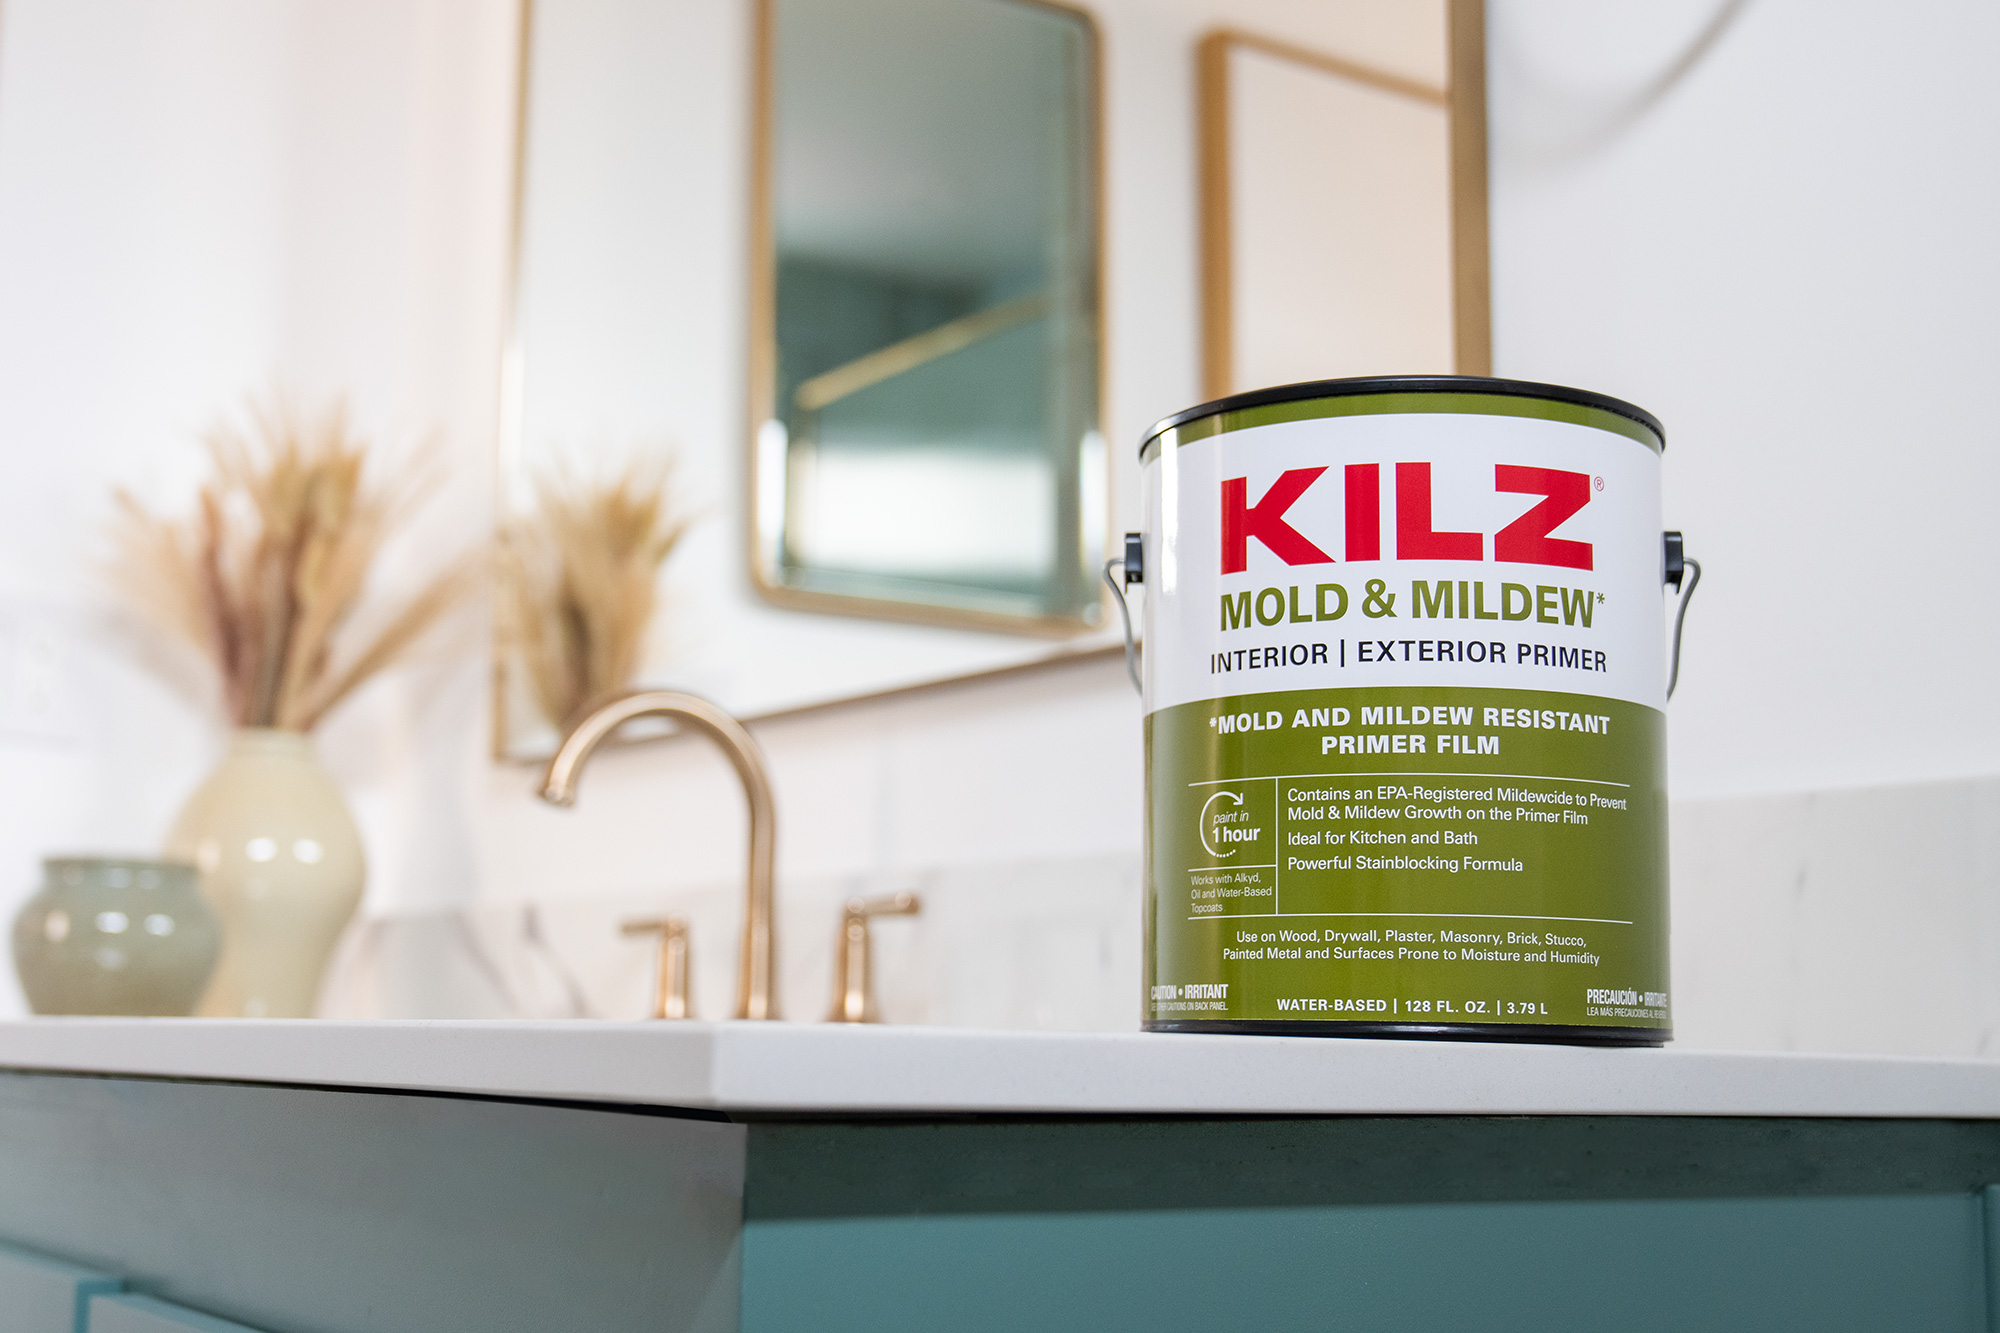 KILZ Mold & Mildew 1 Gallon Can on Bathroom Counter.